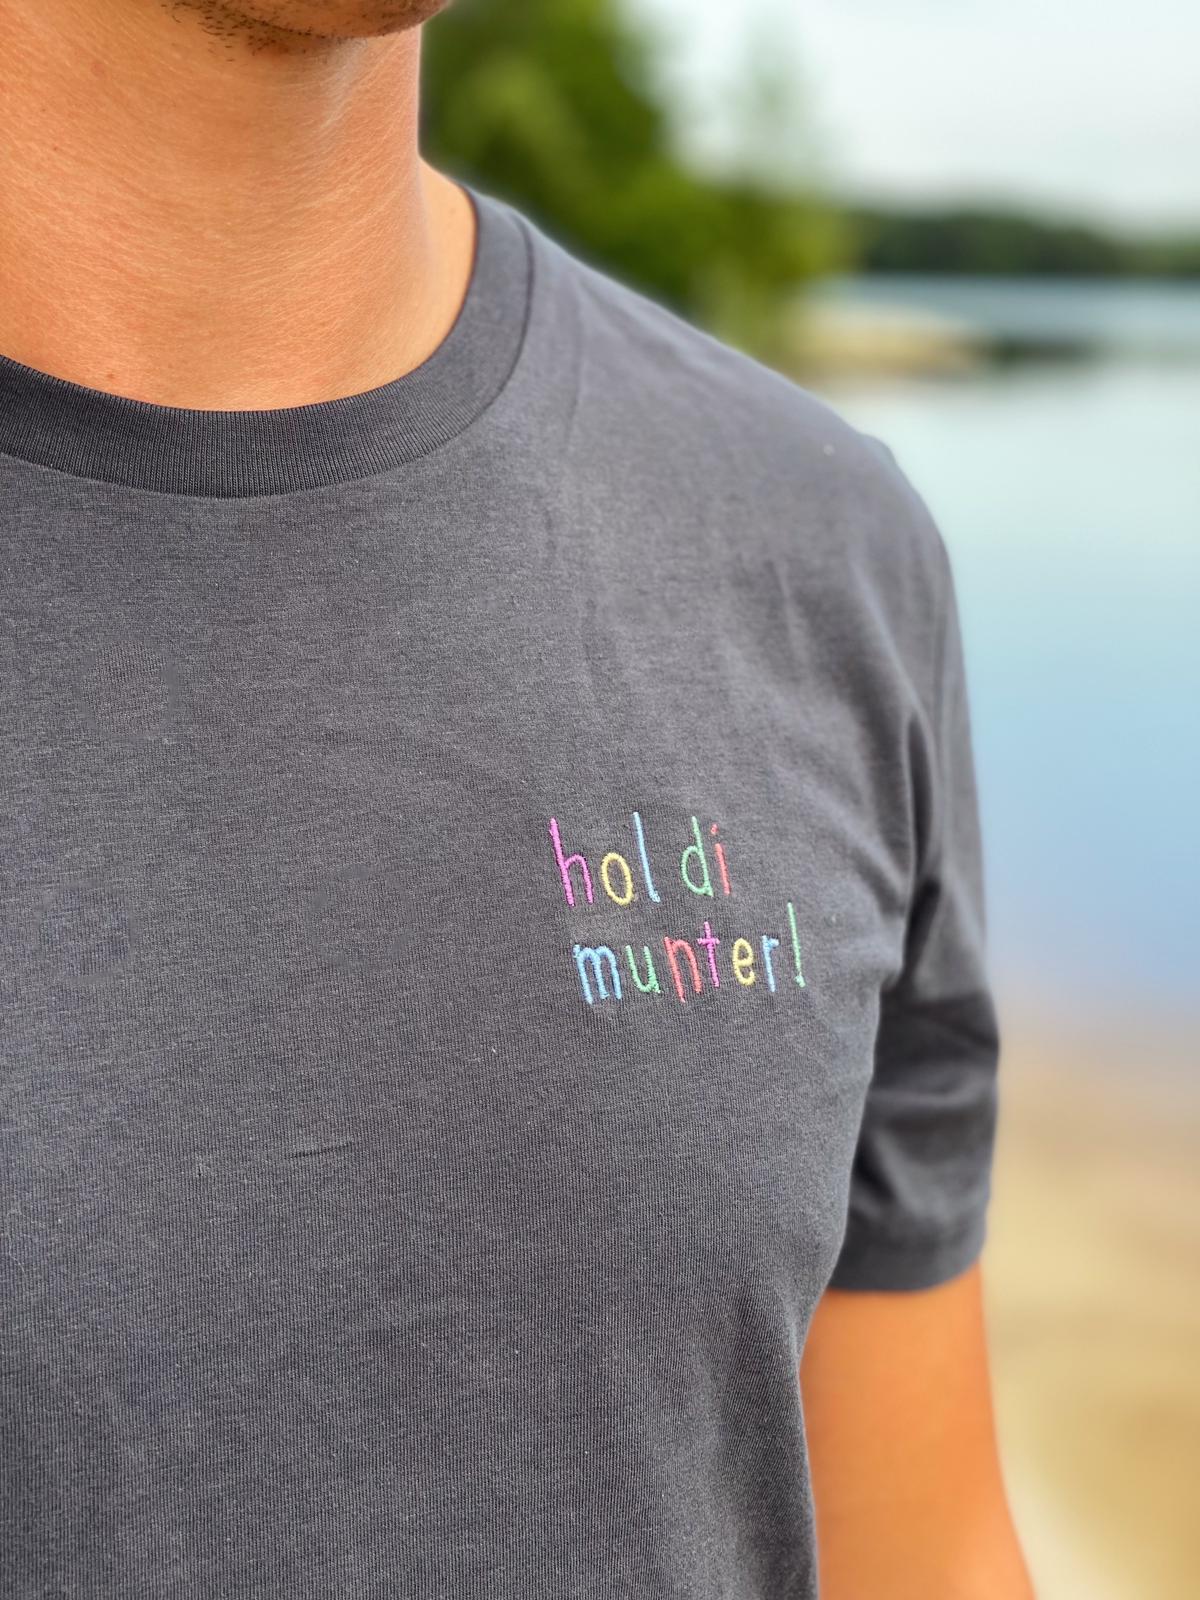 T-Shirt mit "Hol di munter" Spruch